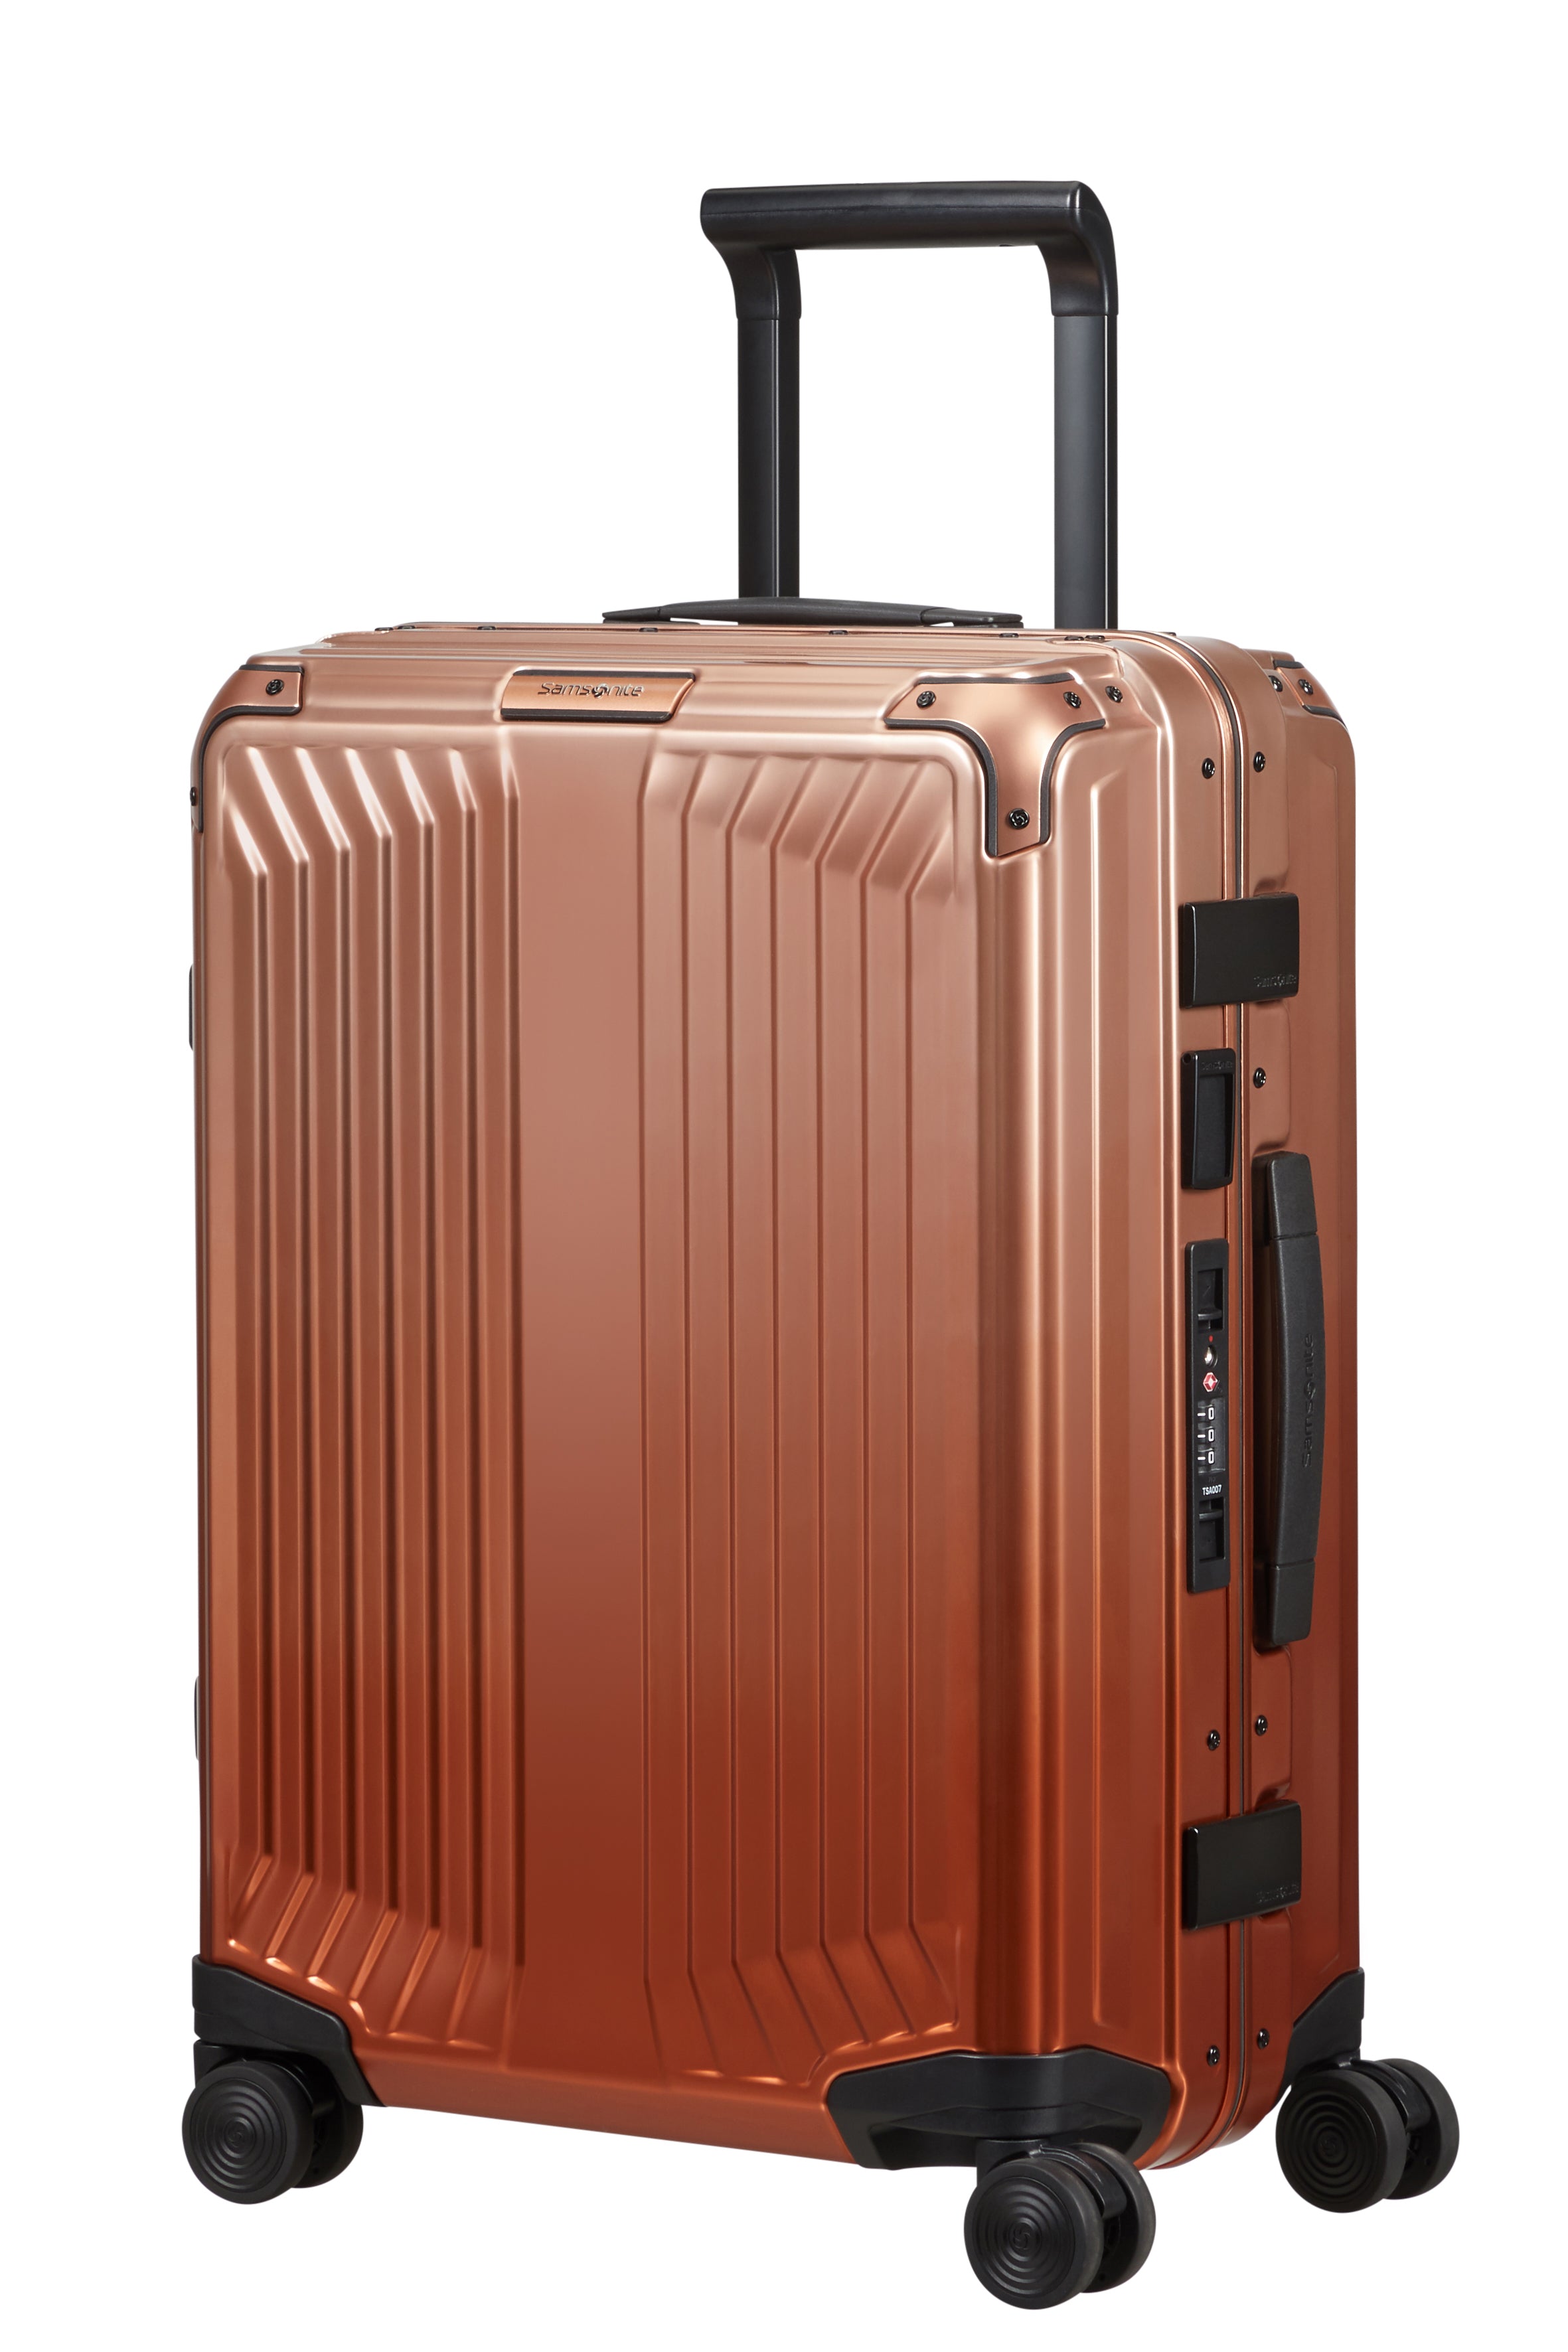 Samsonite - Lite Box ALU 55cm Small 4 Wheel Hard Suitcase - Gradient Copper-1